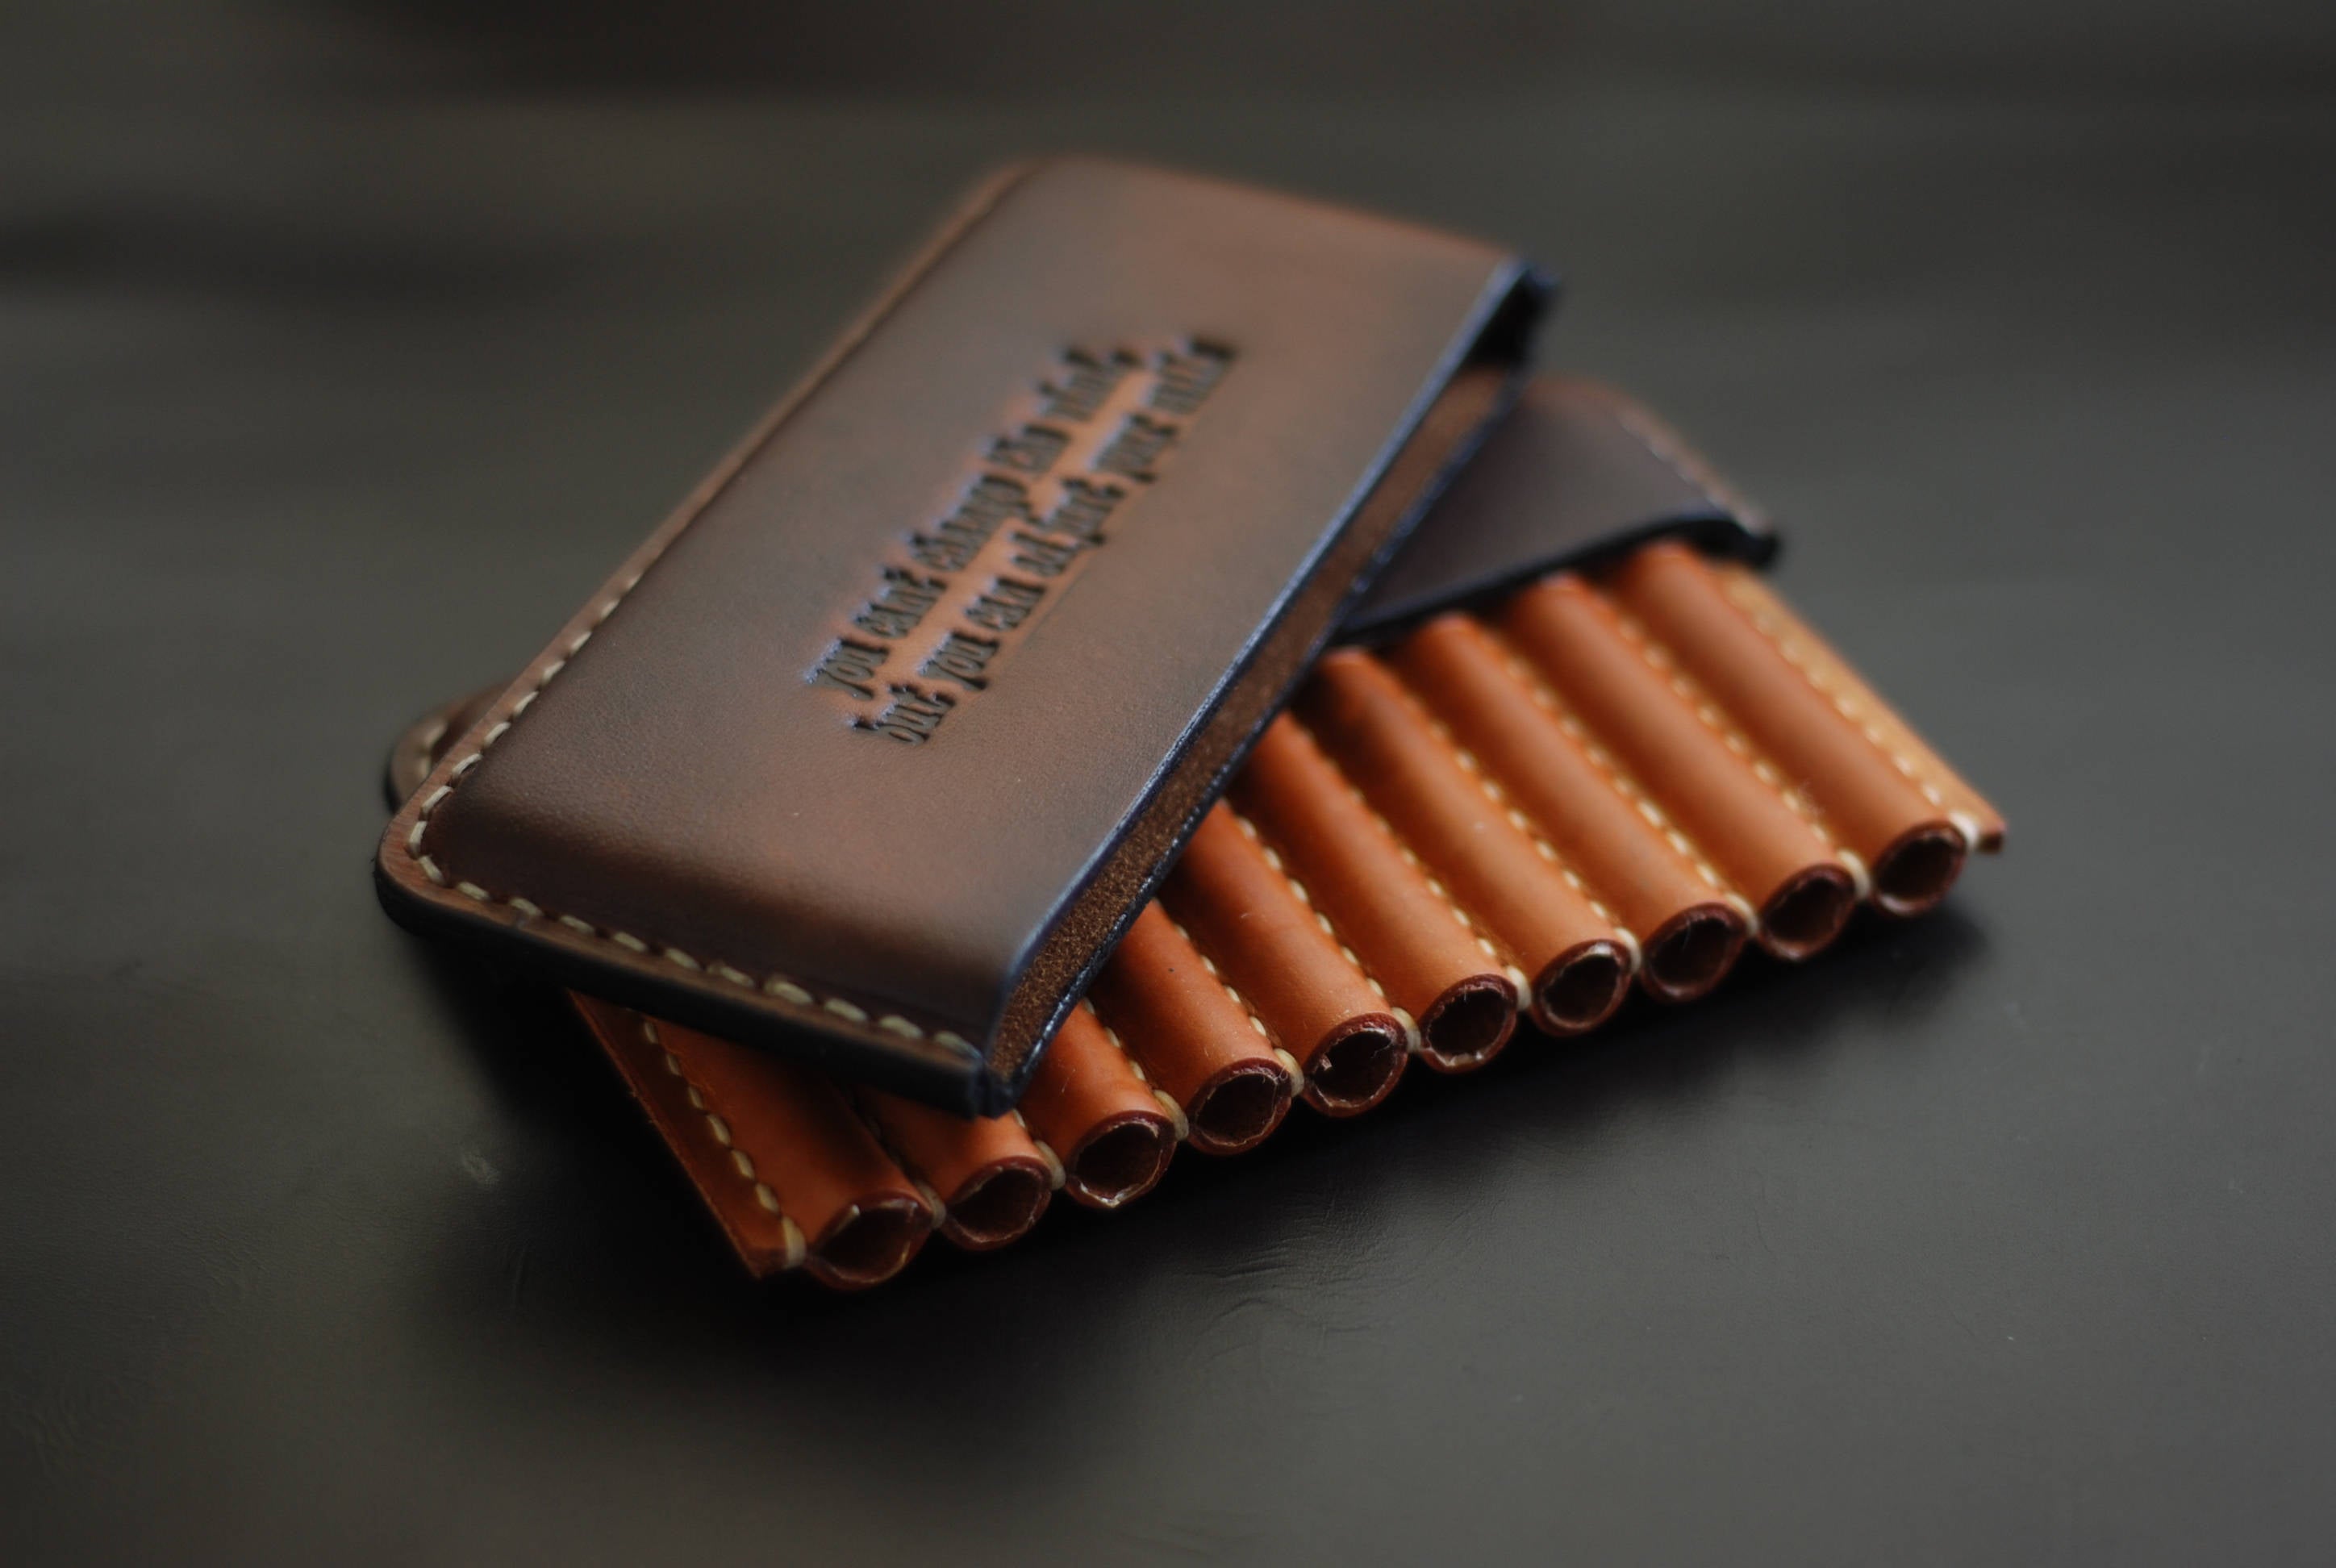 Personalized Cigarette Case, Engraved Cigarette Holder, Customised Monogram Cigarillo  Case, Double Sided Custom Pocket Cigarette Case 